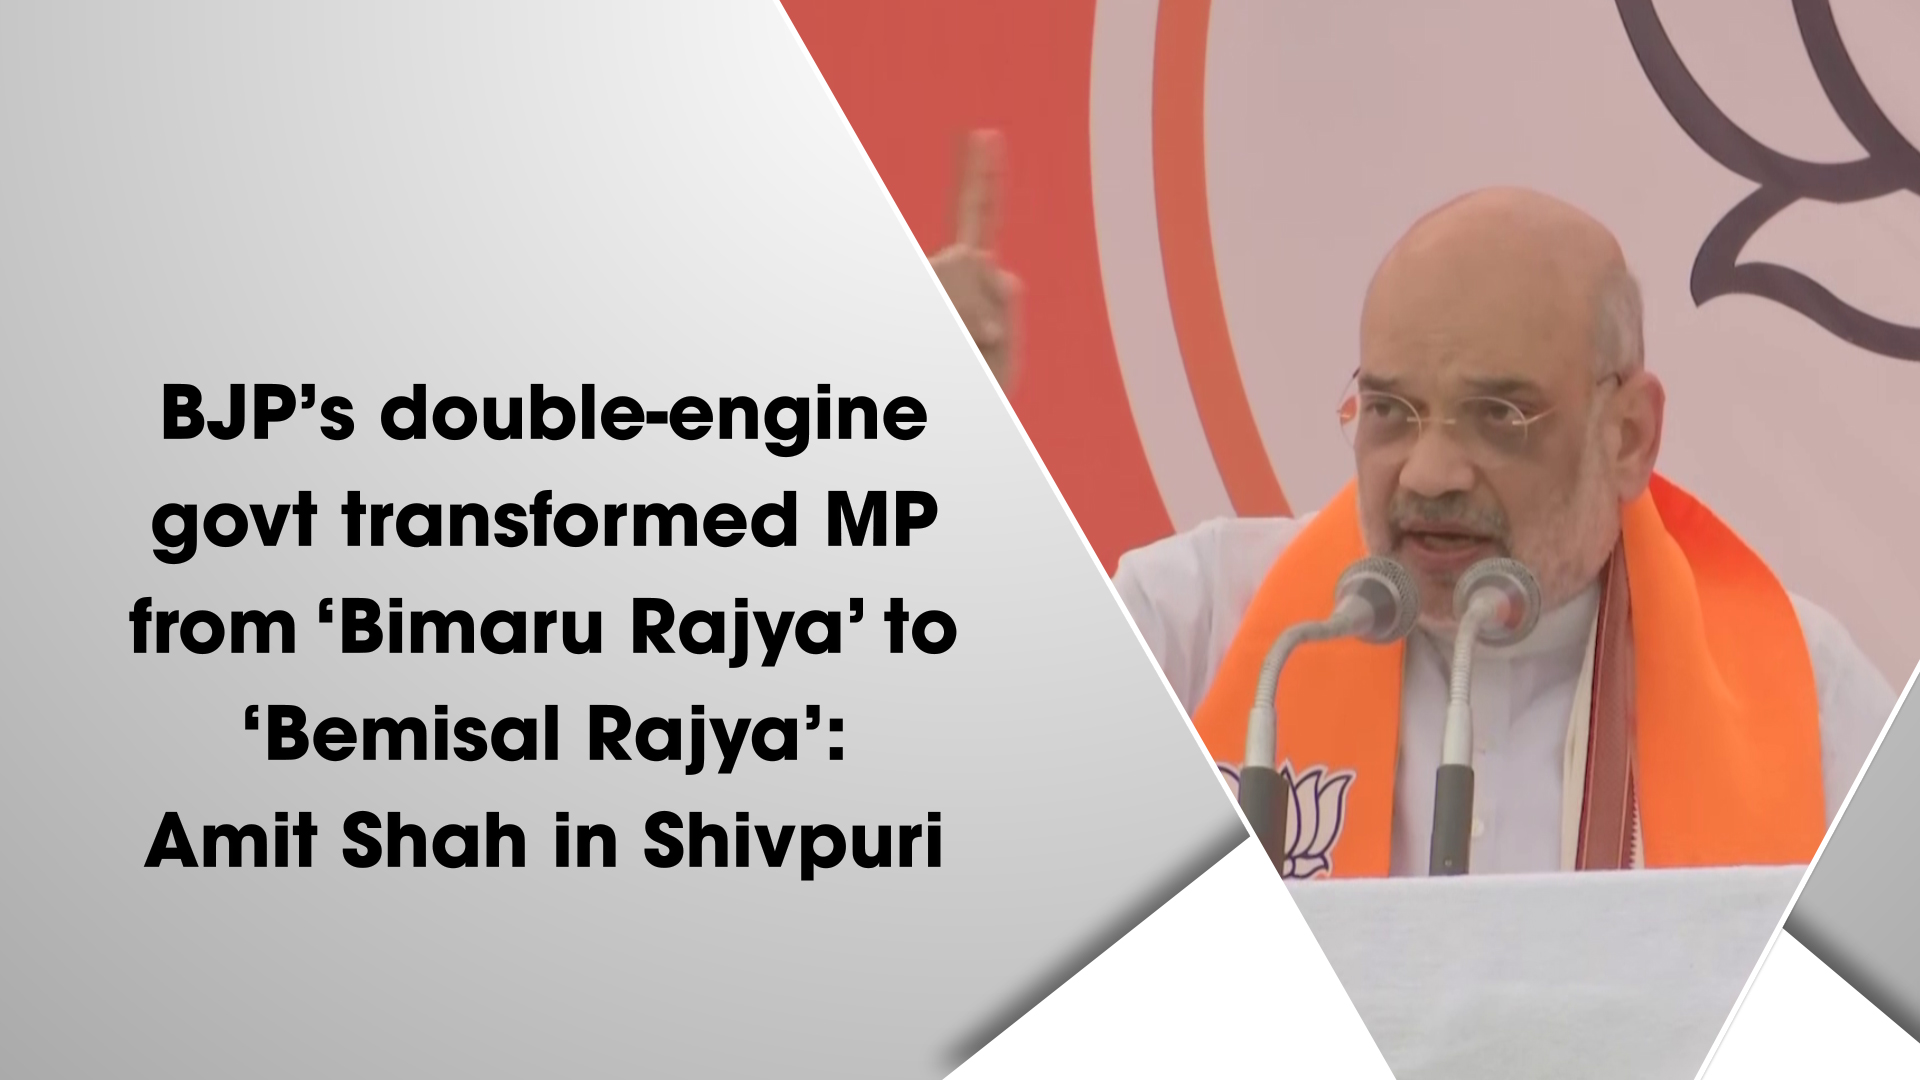 BJP`s double-engine govt transformed MP from Bimaru Rajya to Bemisal Rajya Amit Shah in Shivpuri